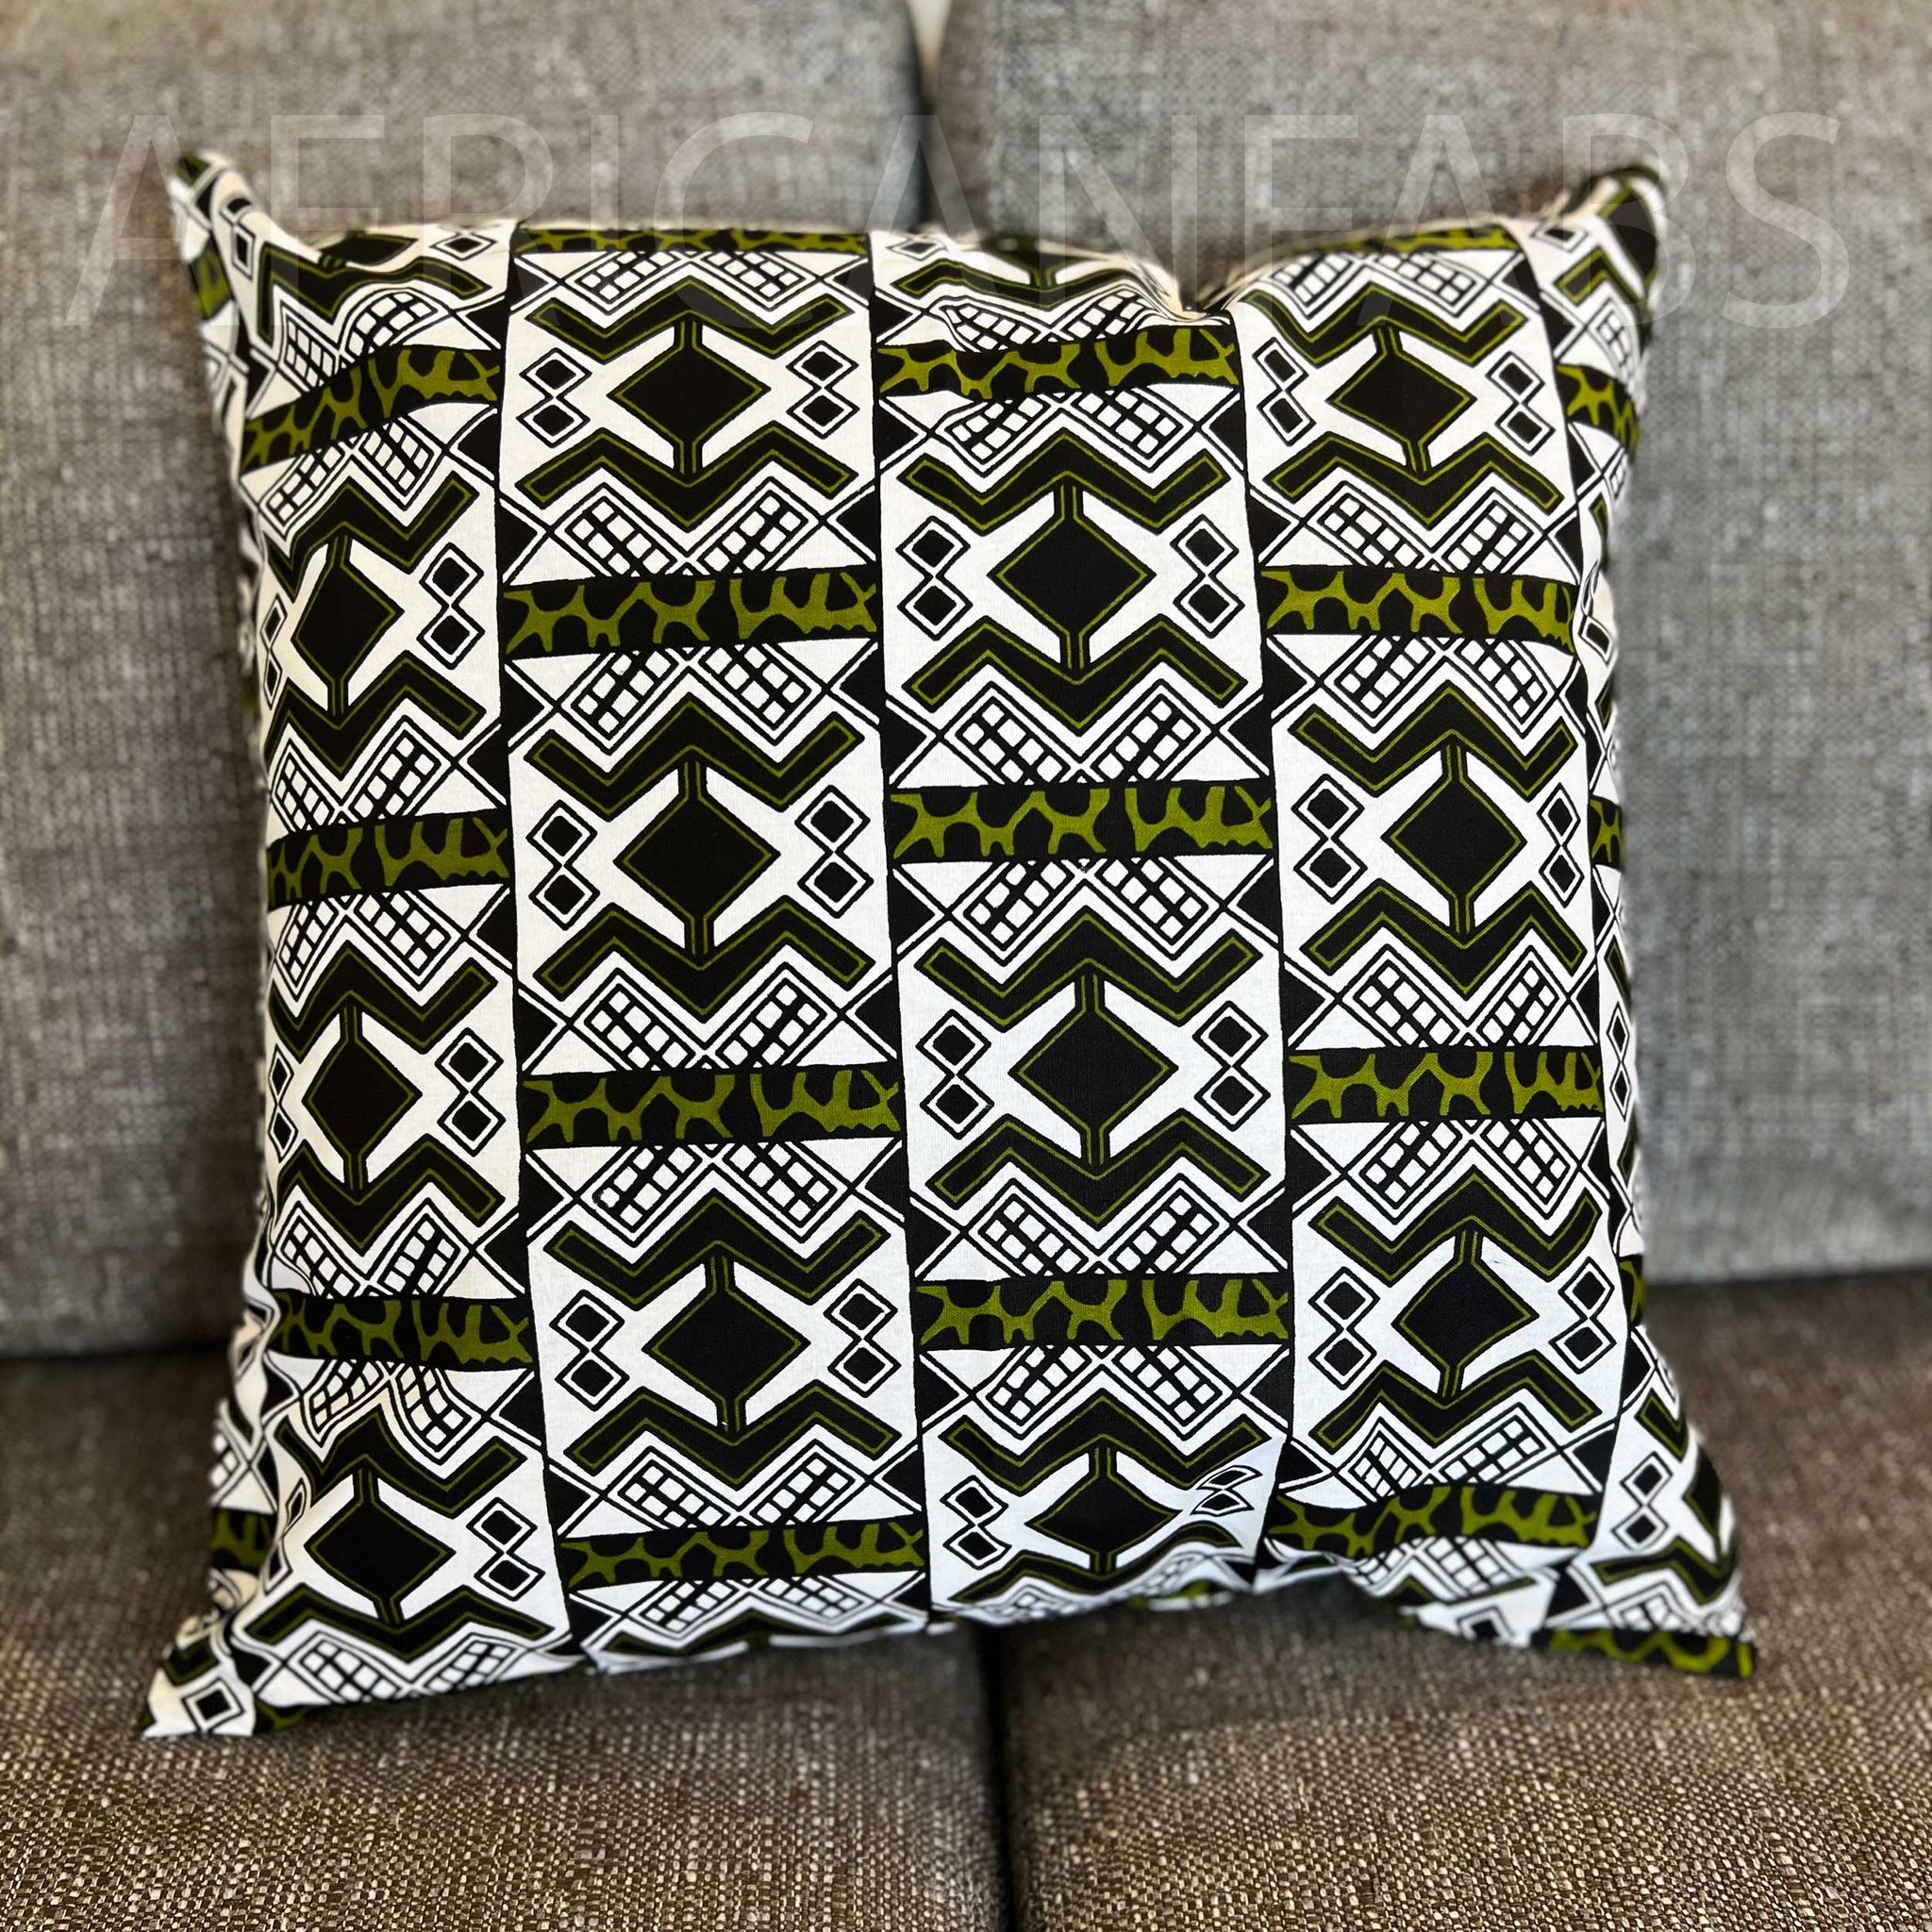 Housse d'oreiller africaine | Blanc / Vert Bogolan - Oreiller décoratif 45x45cm - 100% coton